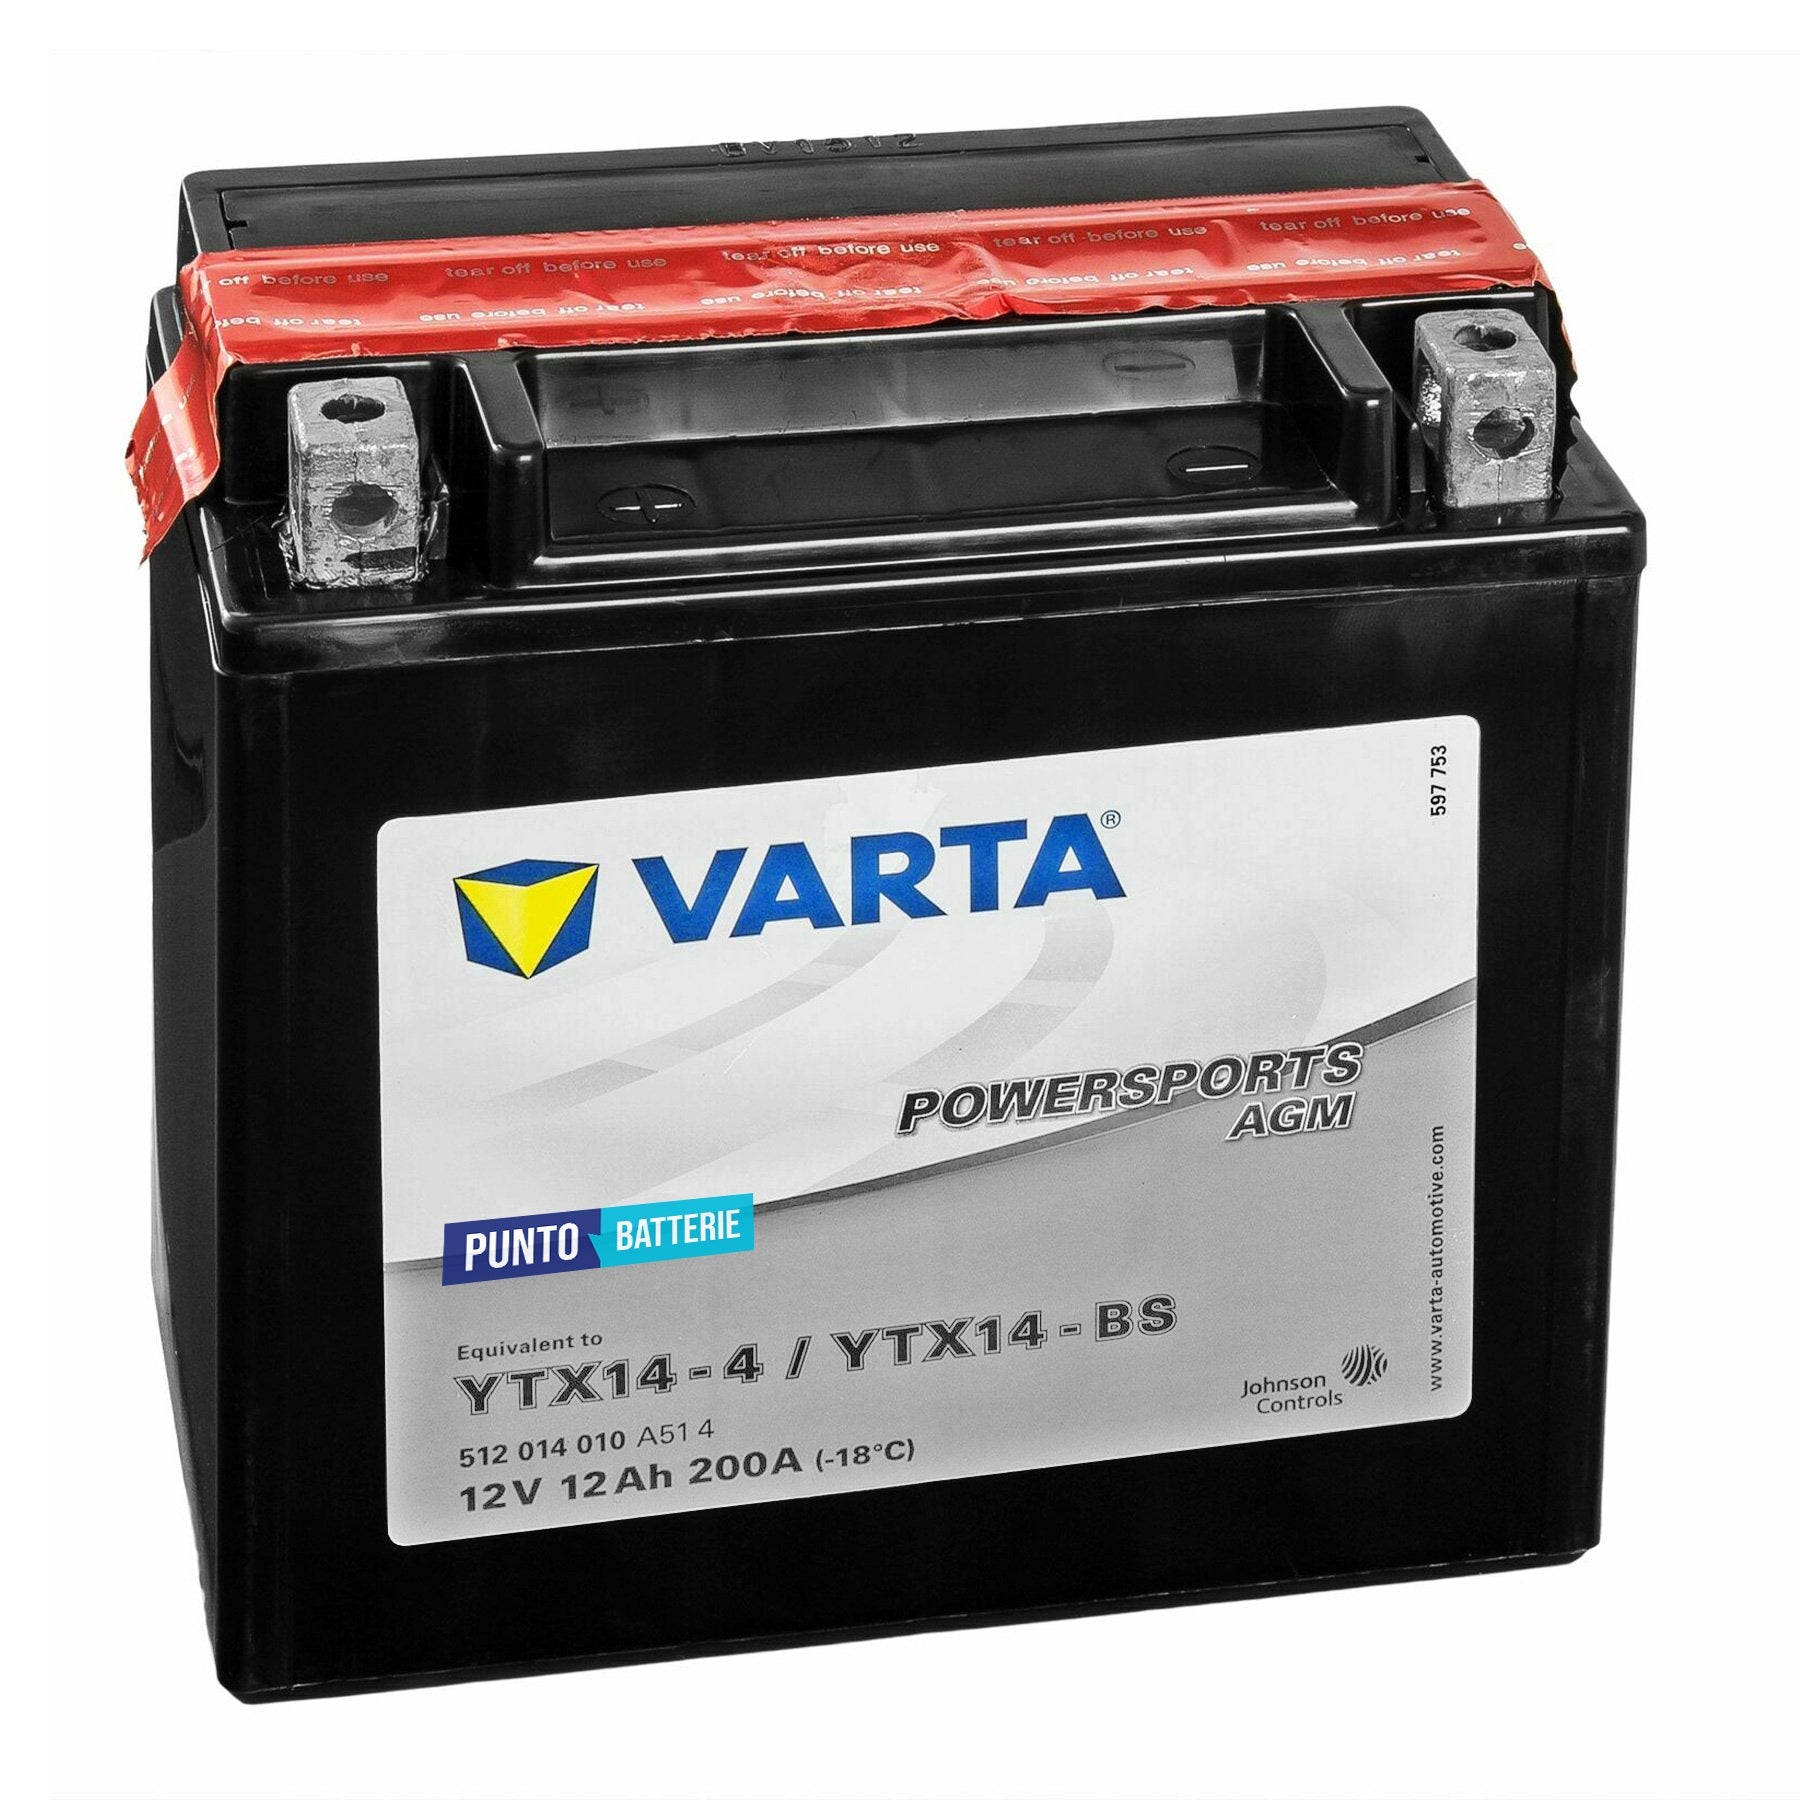 Batteria originale Varta Powersport AGM YTX14-4, dimensioni 152 x 88 x 131, polo positivo a sinistra, 12 volt, 12 amperora, 200 ampere. Batteria per moto, scooter e powersport.